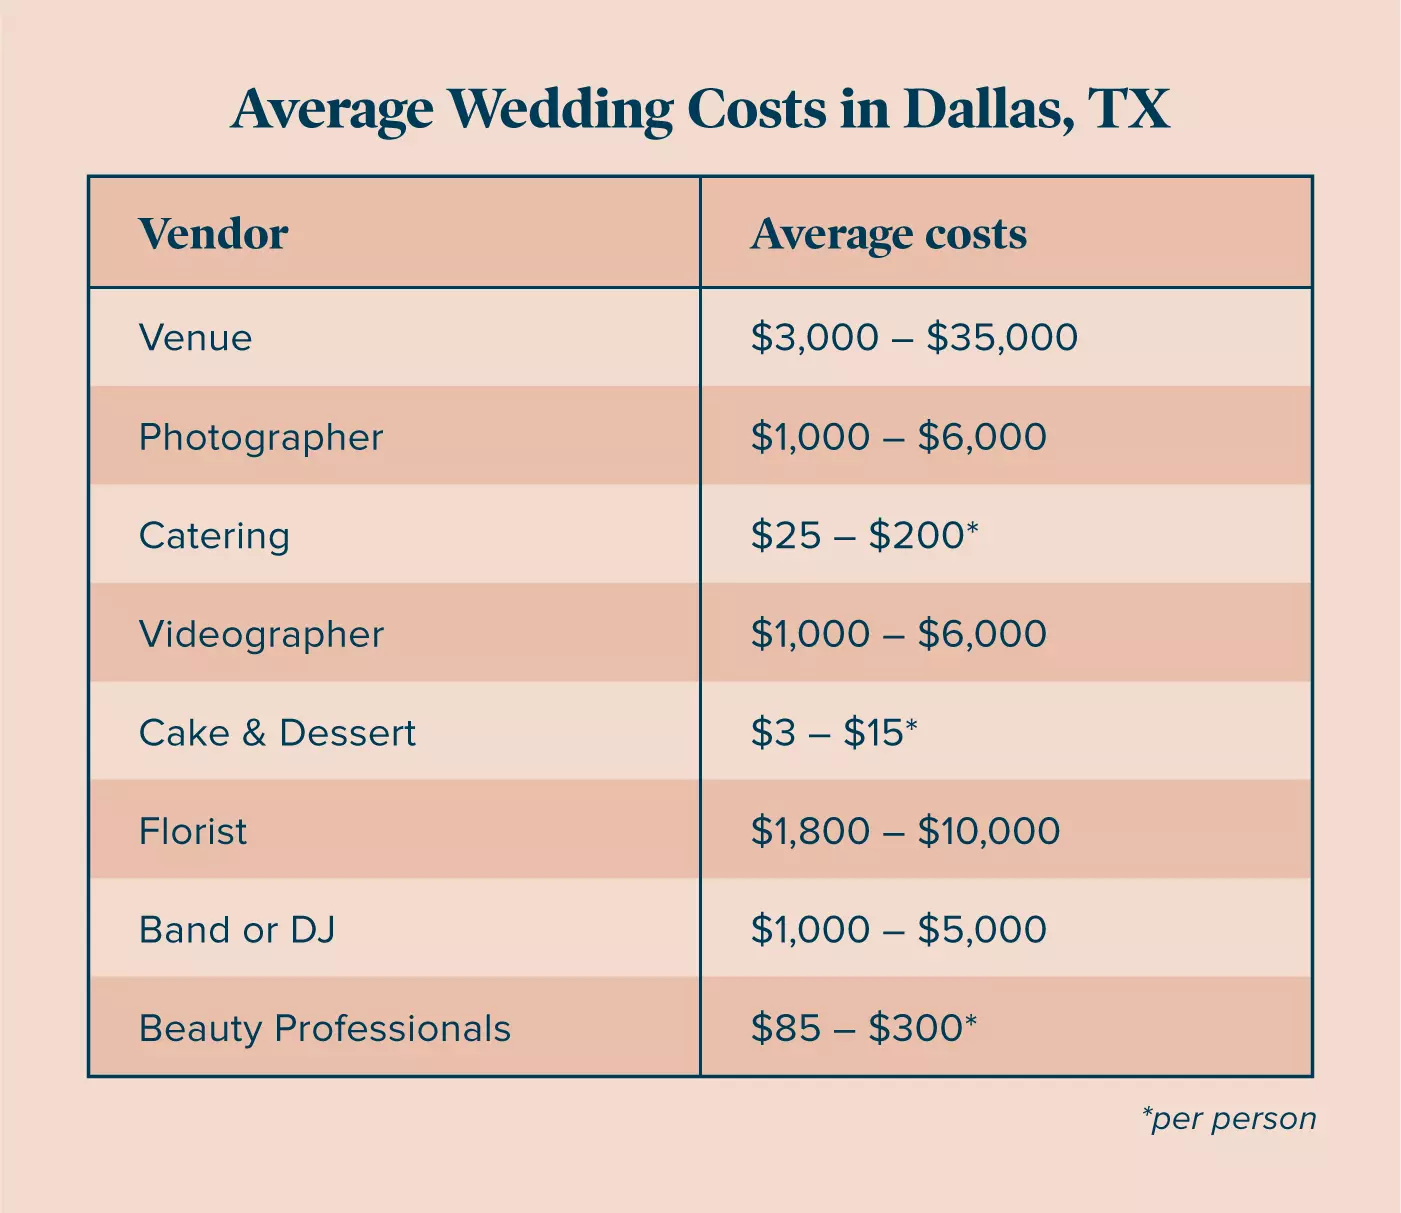 Average Wedding Costs in Dallas